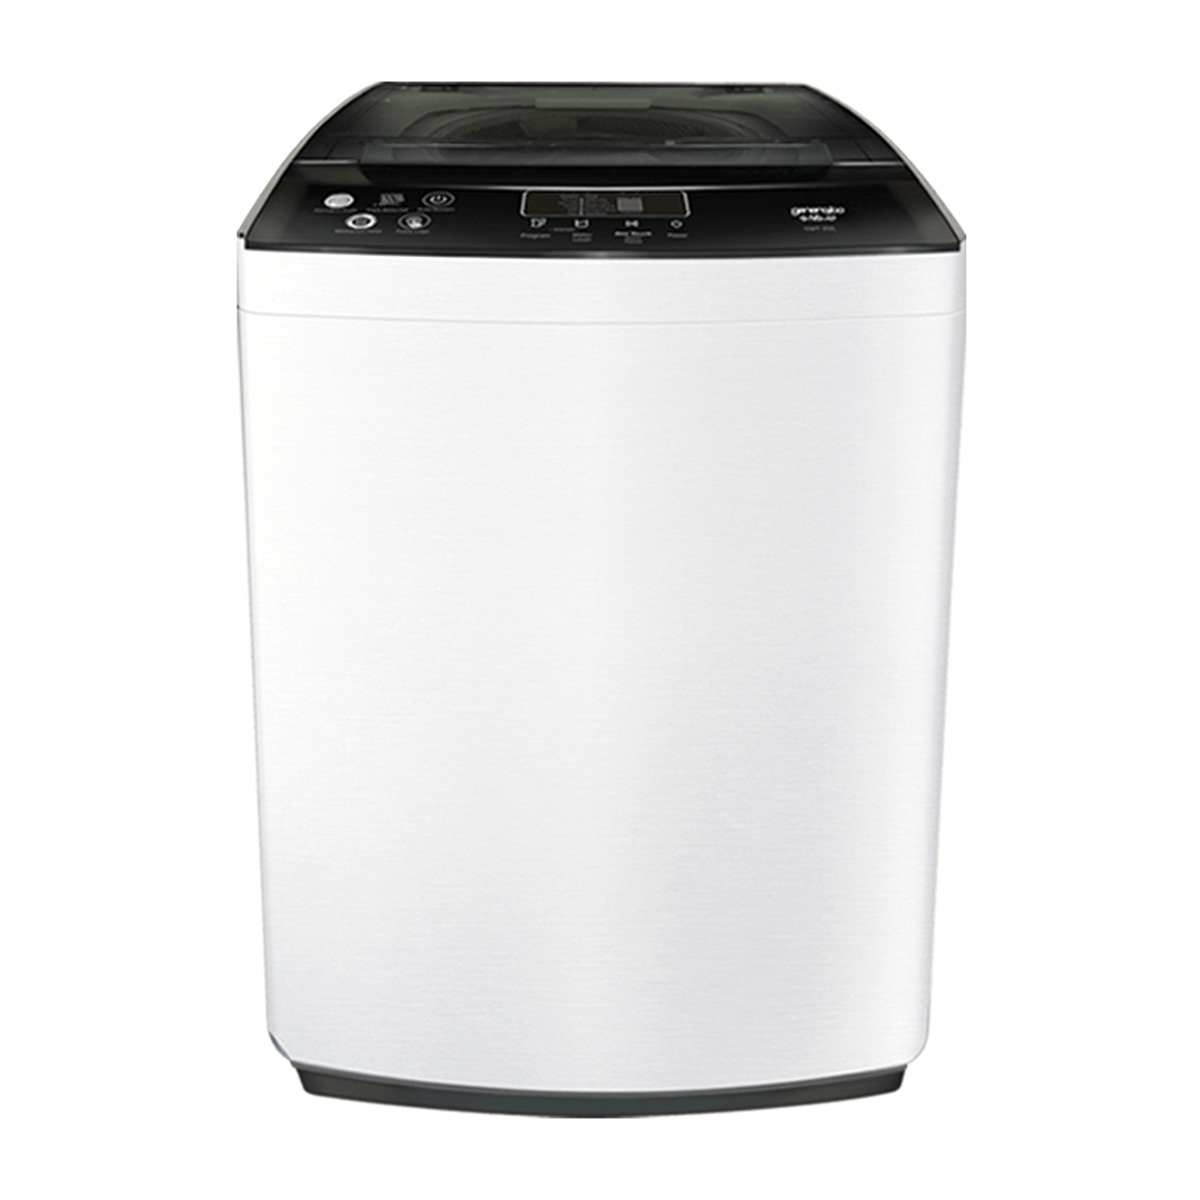 Generalco Top Loading Automatic Washing Machine, 9 kg, 700 rpm, White, GDWT-90ALBZ